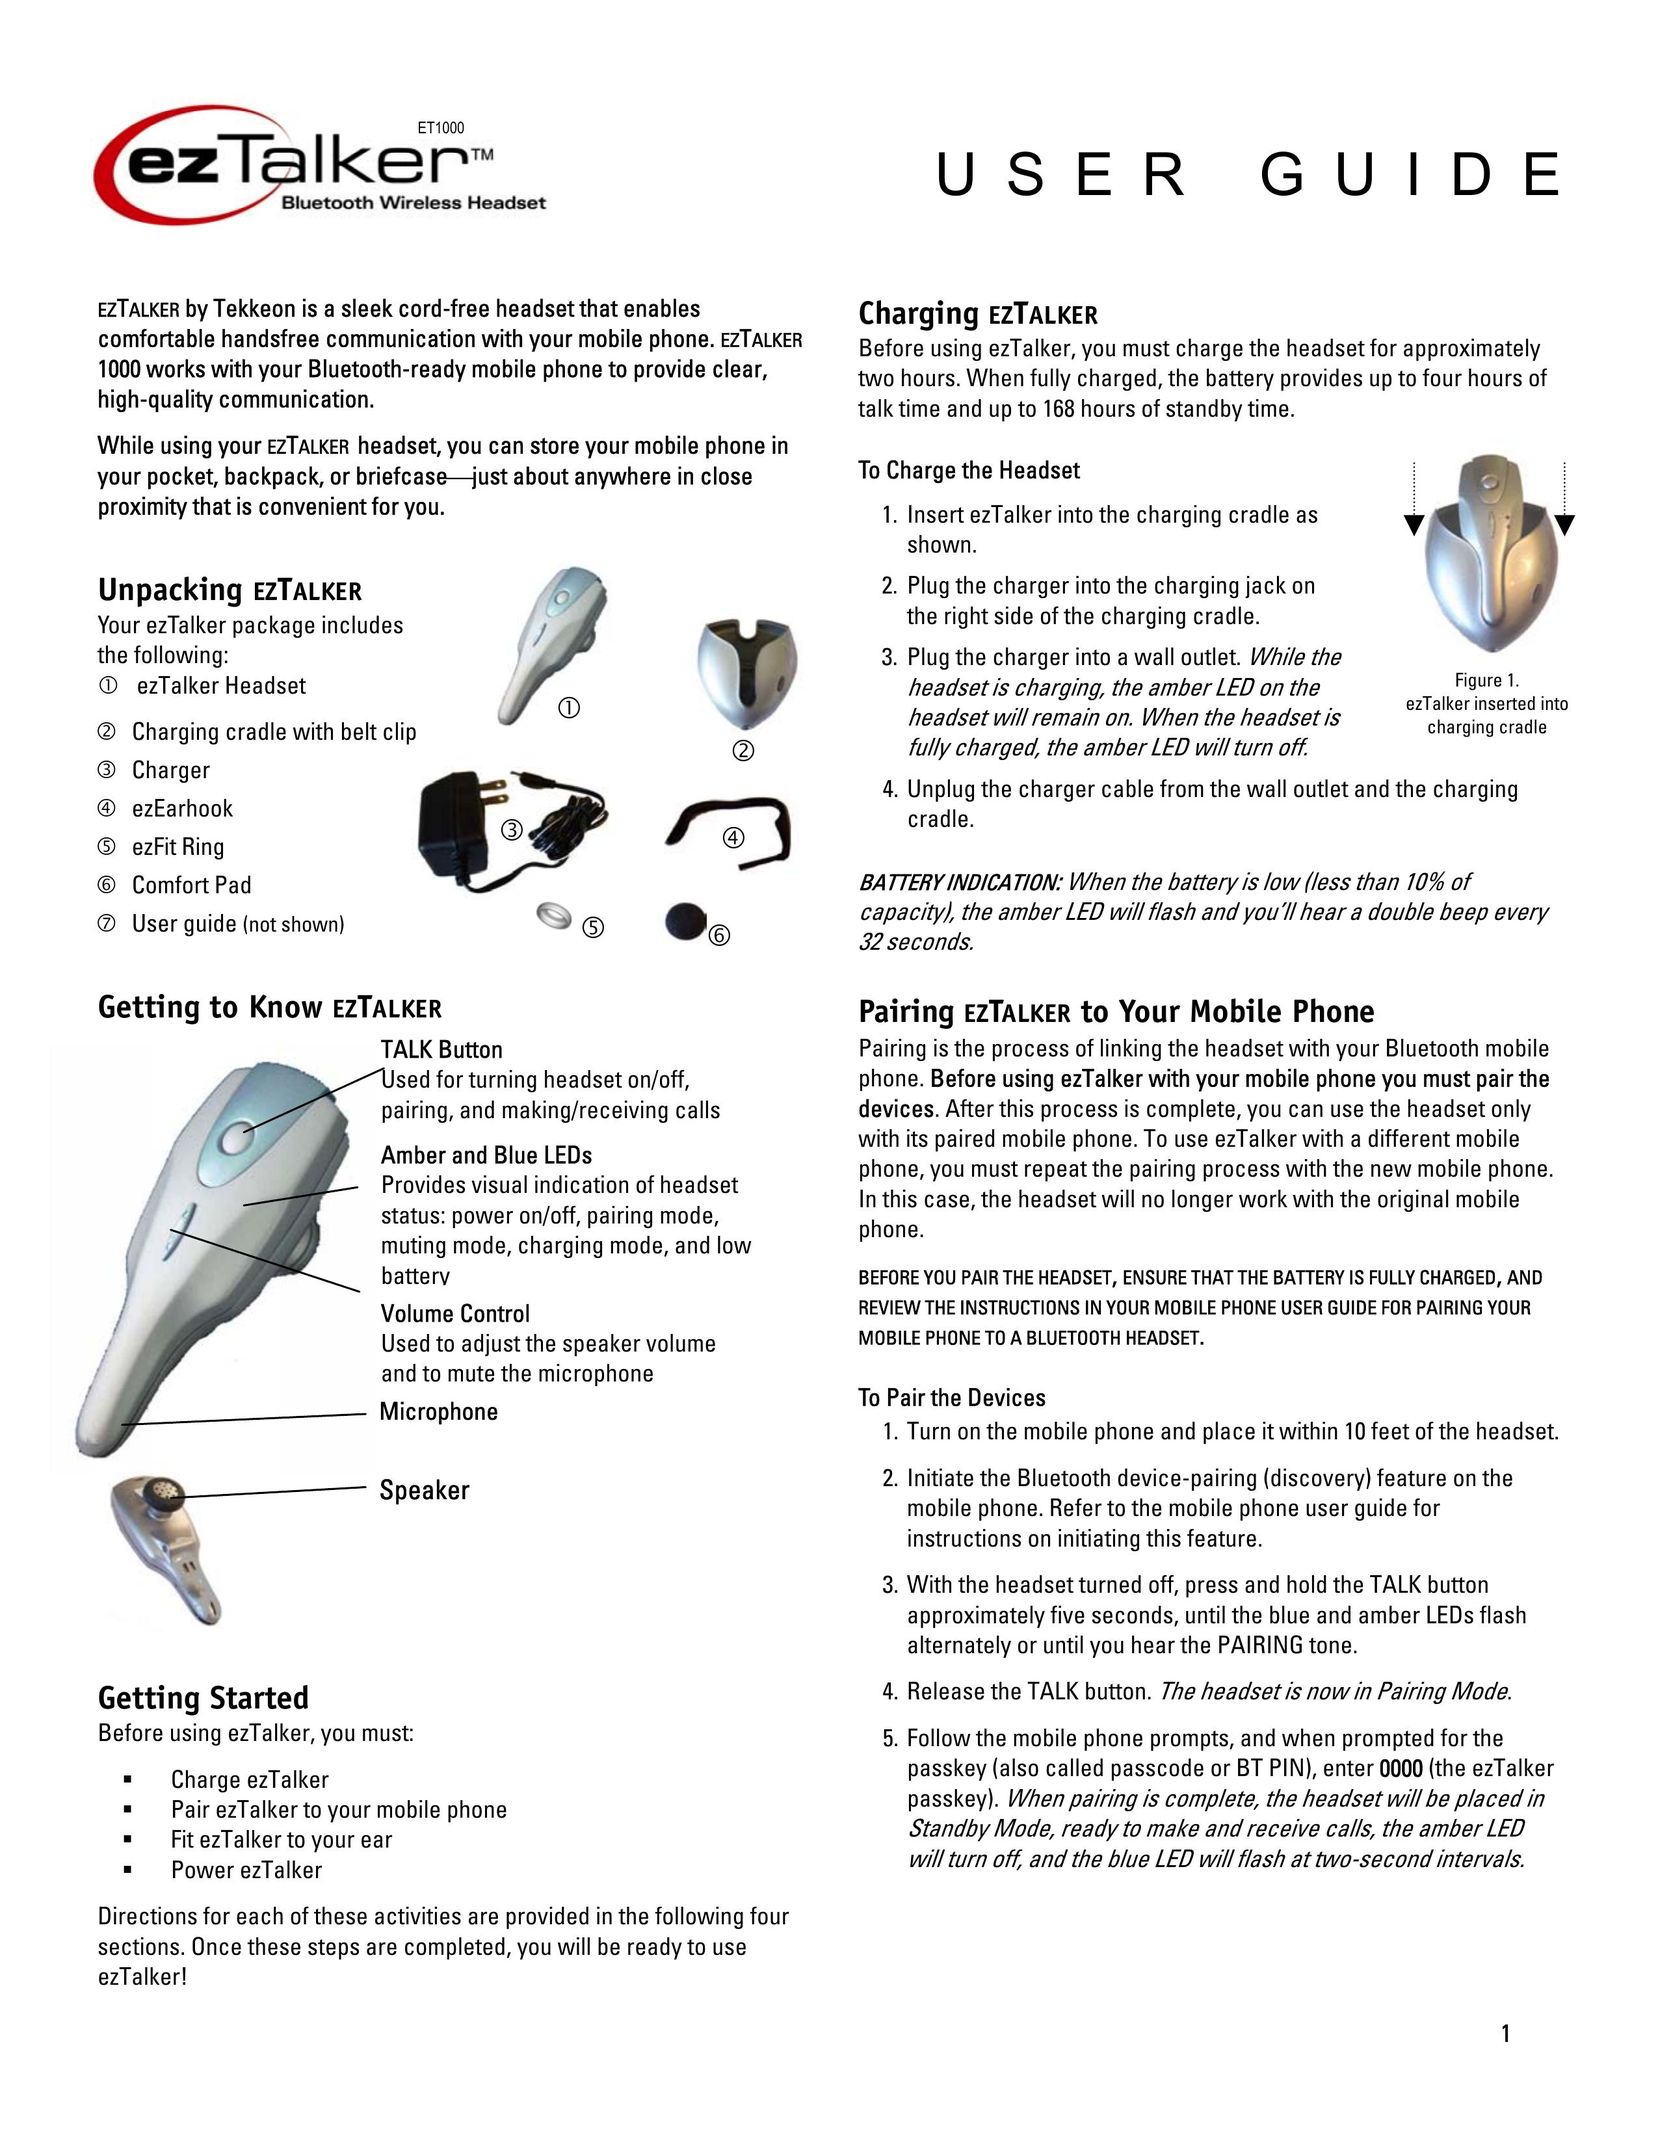 Tekkeon ET1000 Bluetooth Headset User Manual